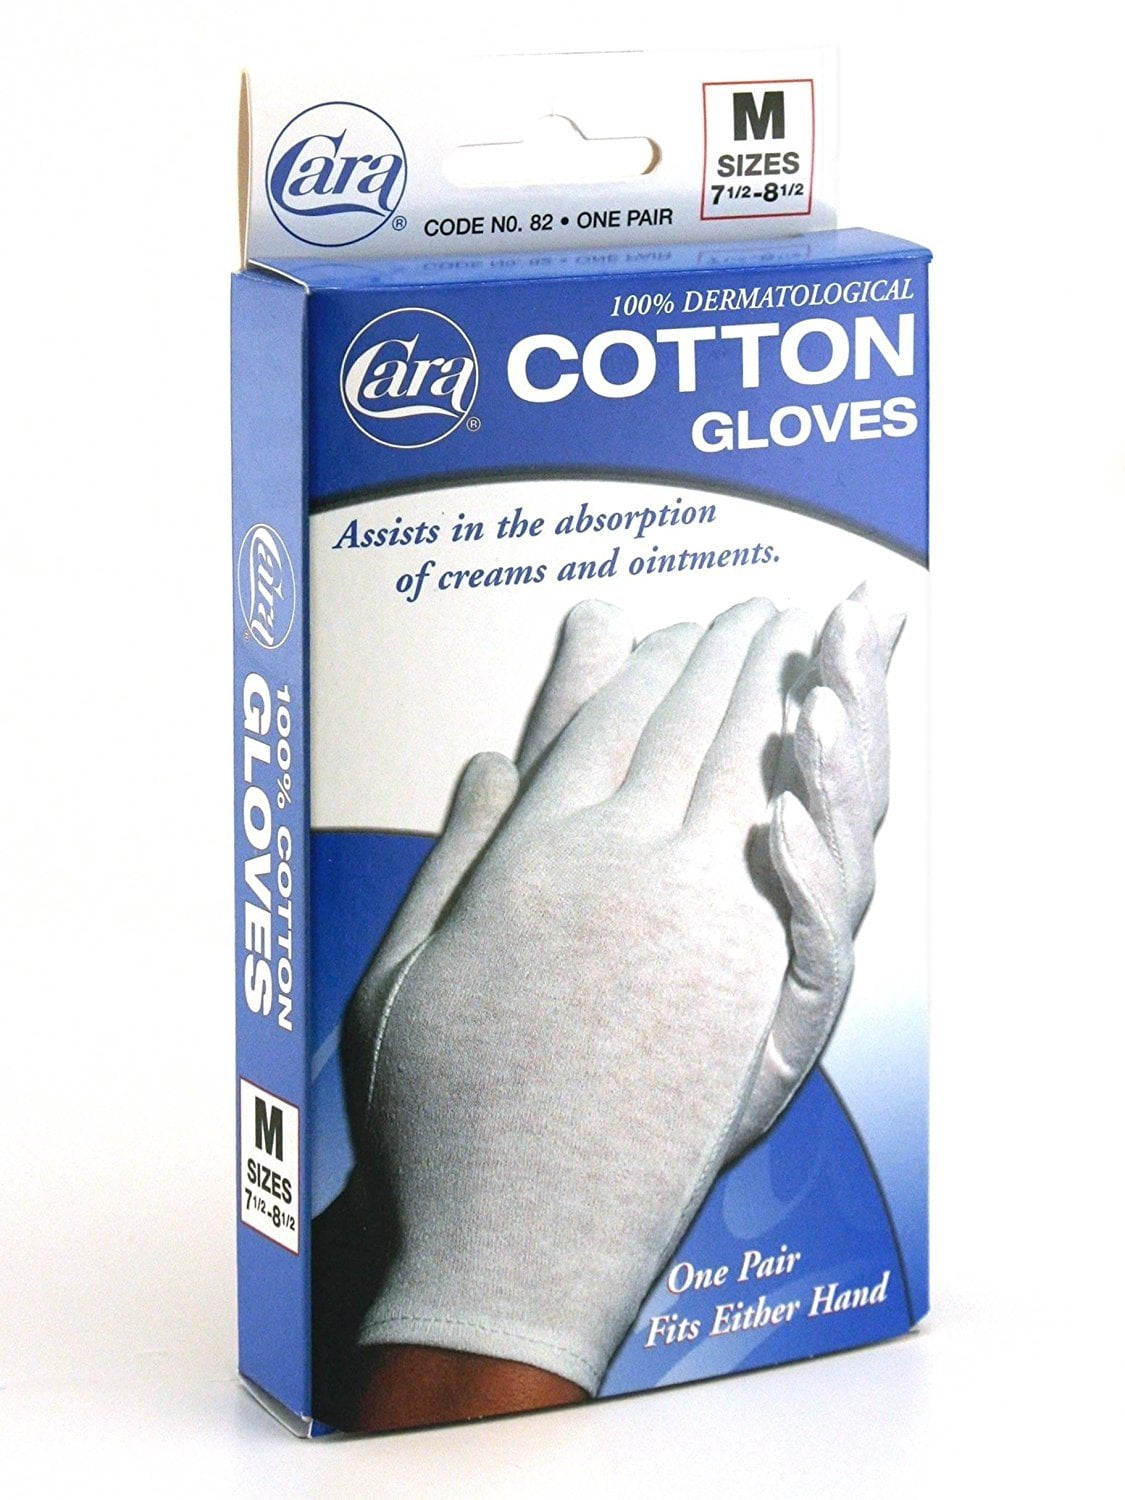 CARA 100% Dermatological Cotton Gloves, Small - Walmart.com - Walmart.com